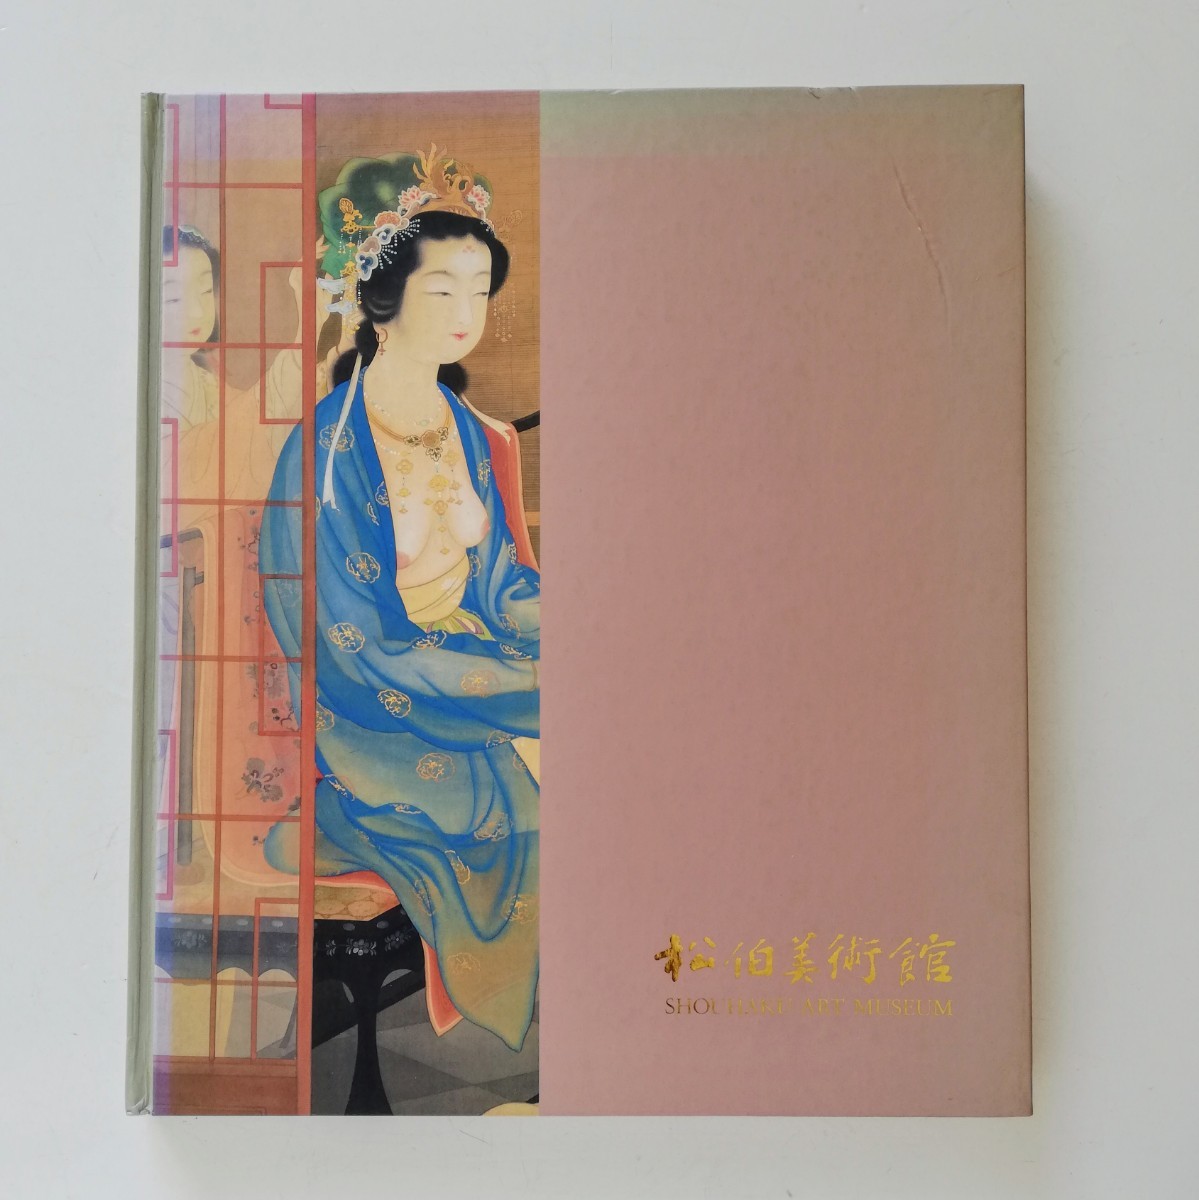 a3. [Catalogue] Shohaku Museum of Art - Catalogue of works in the Shohaku Museum of Art - 1994 Published by Shohaku Museum of Art, Painting, Art Book, Collection, Catalog